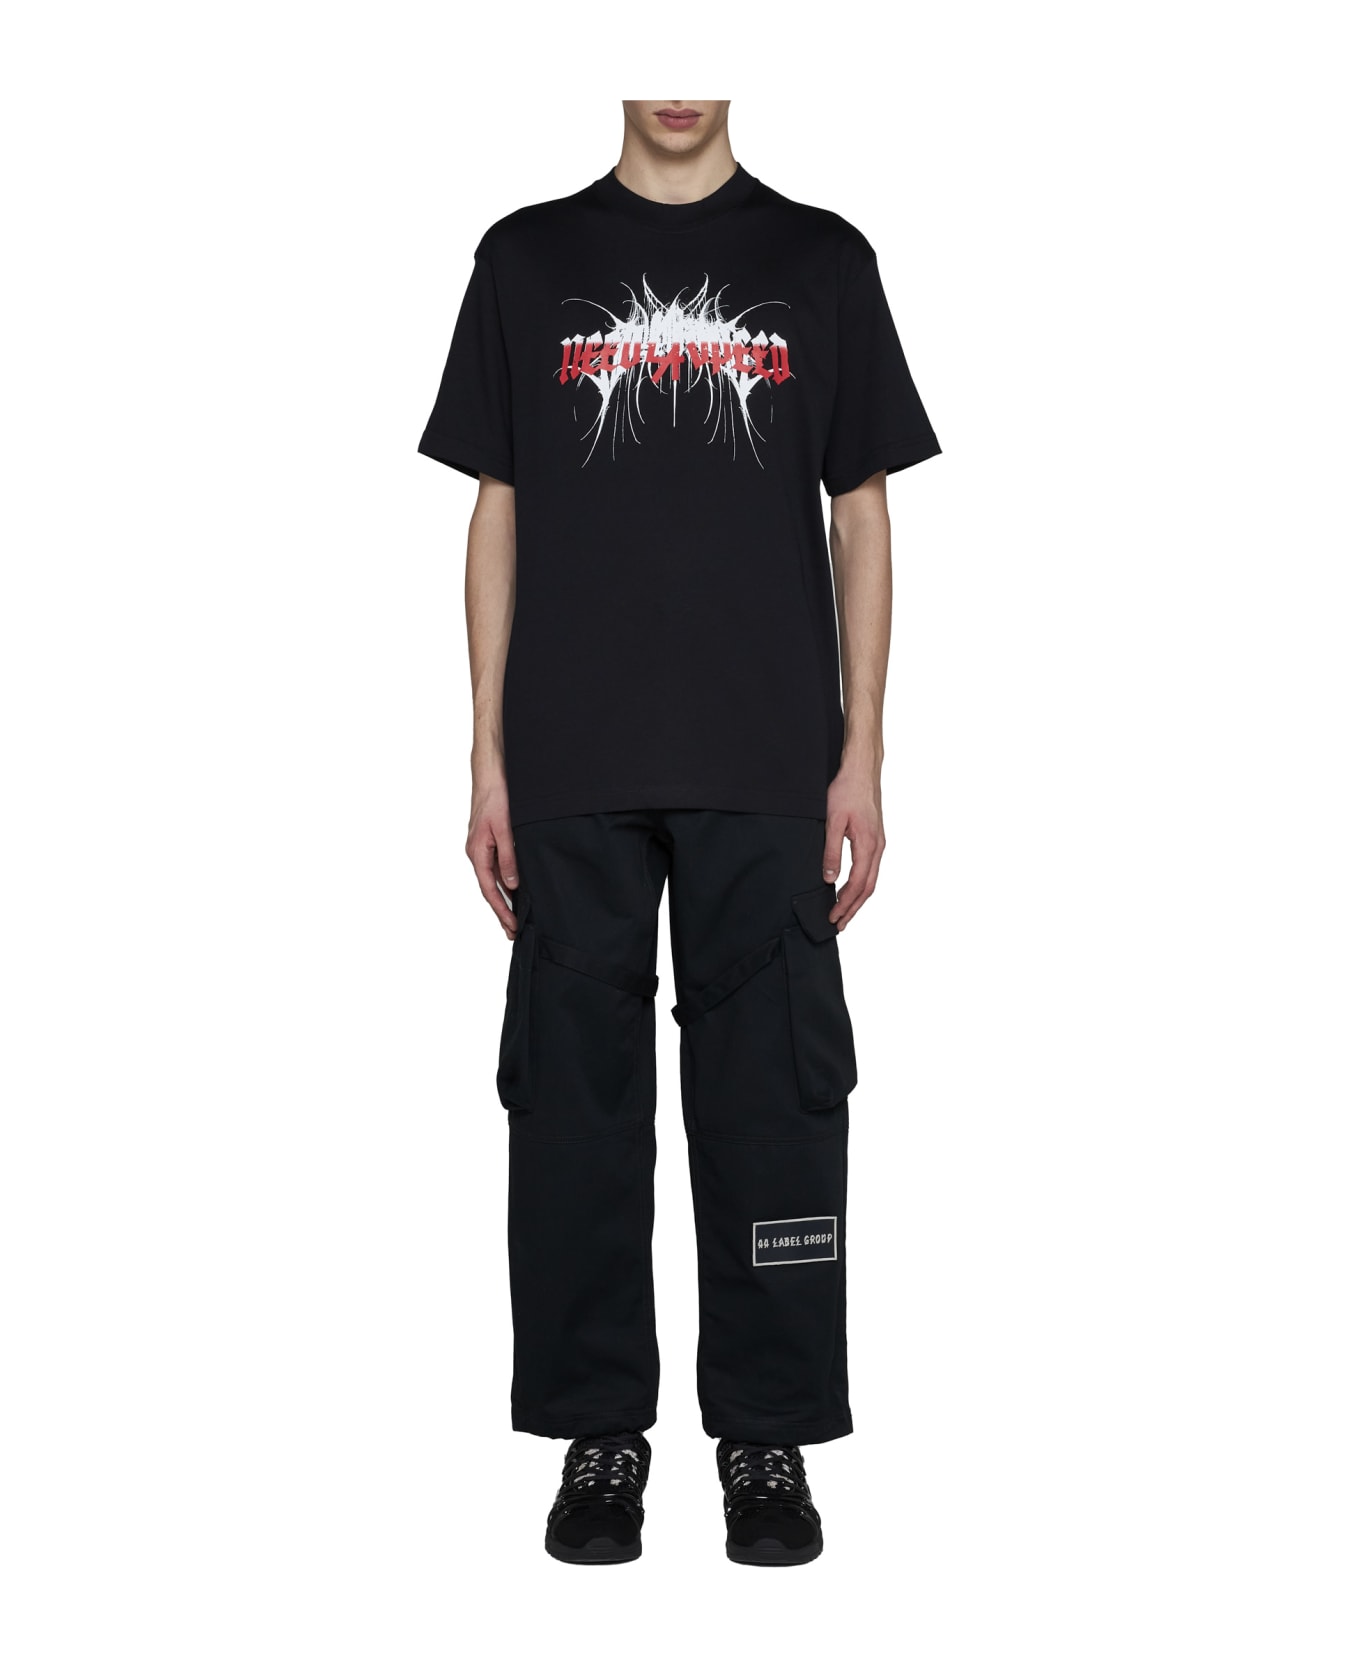 44 Label Group T-Shirt - Black+speed demon print